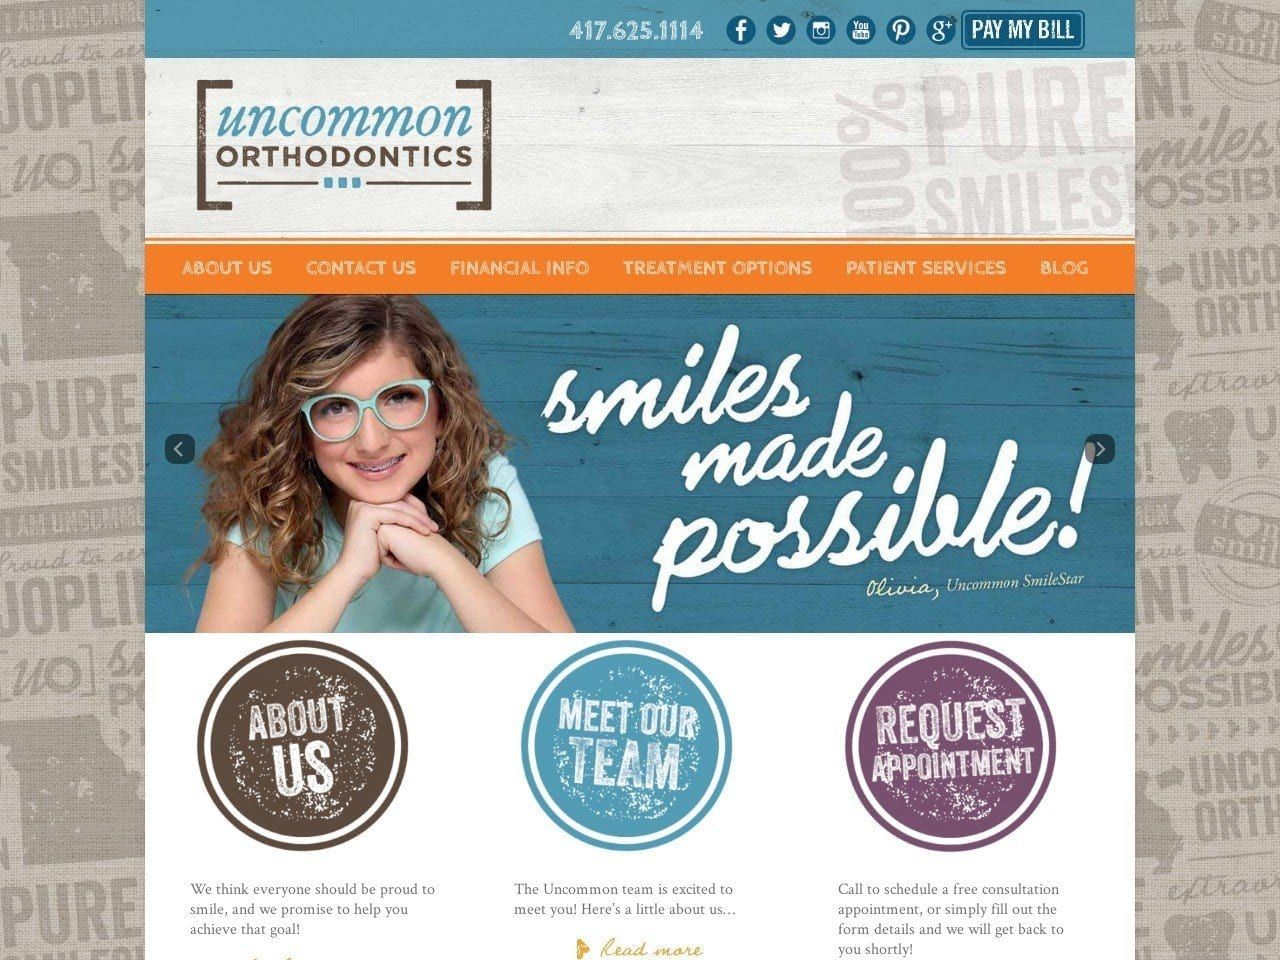 Uncommon Orthodontics Website Screenshot from uncommonortho.com